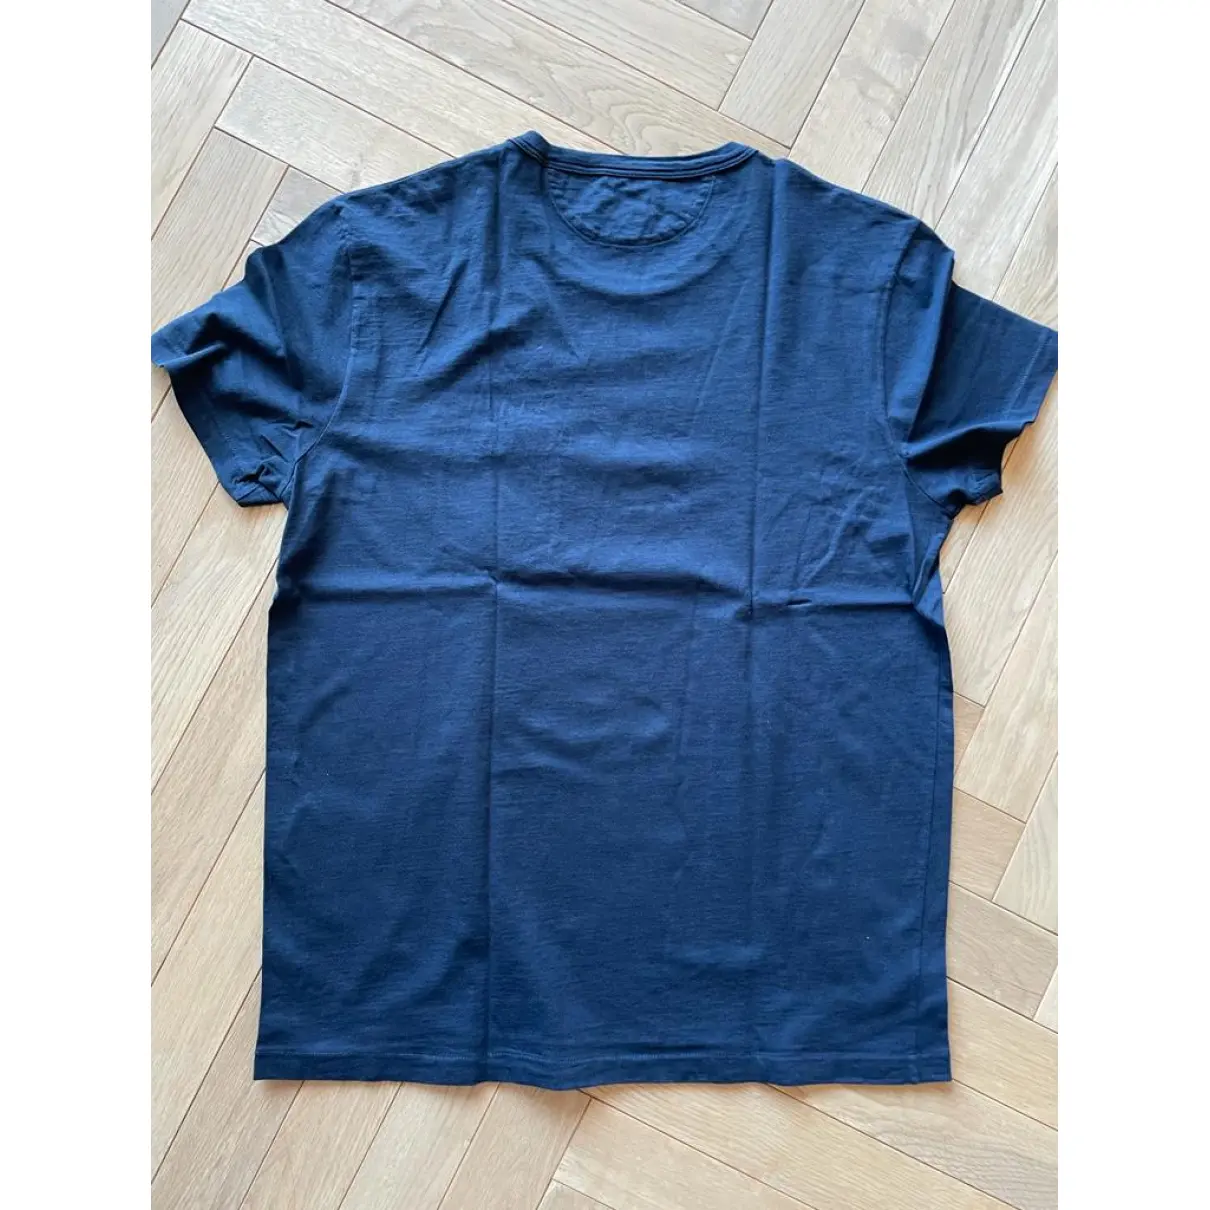 Buy Tom Ford T-shirt online